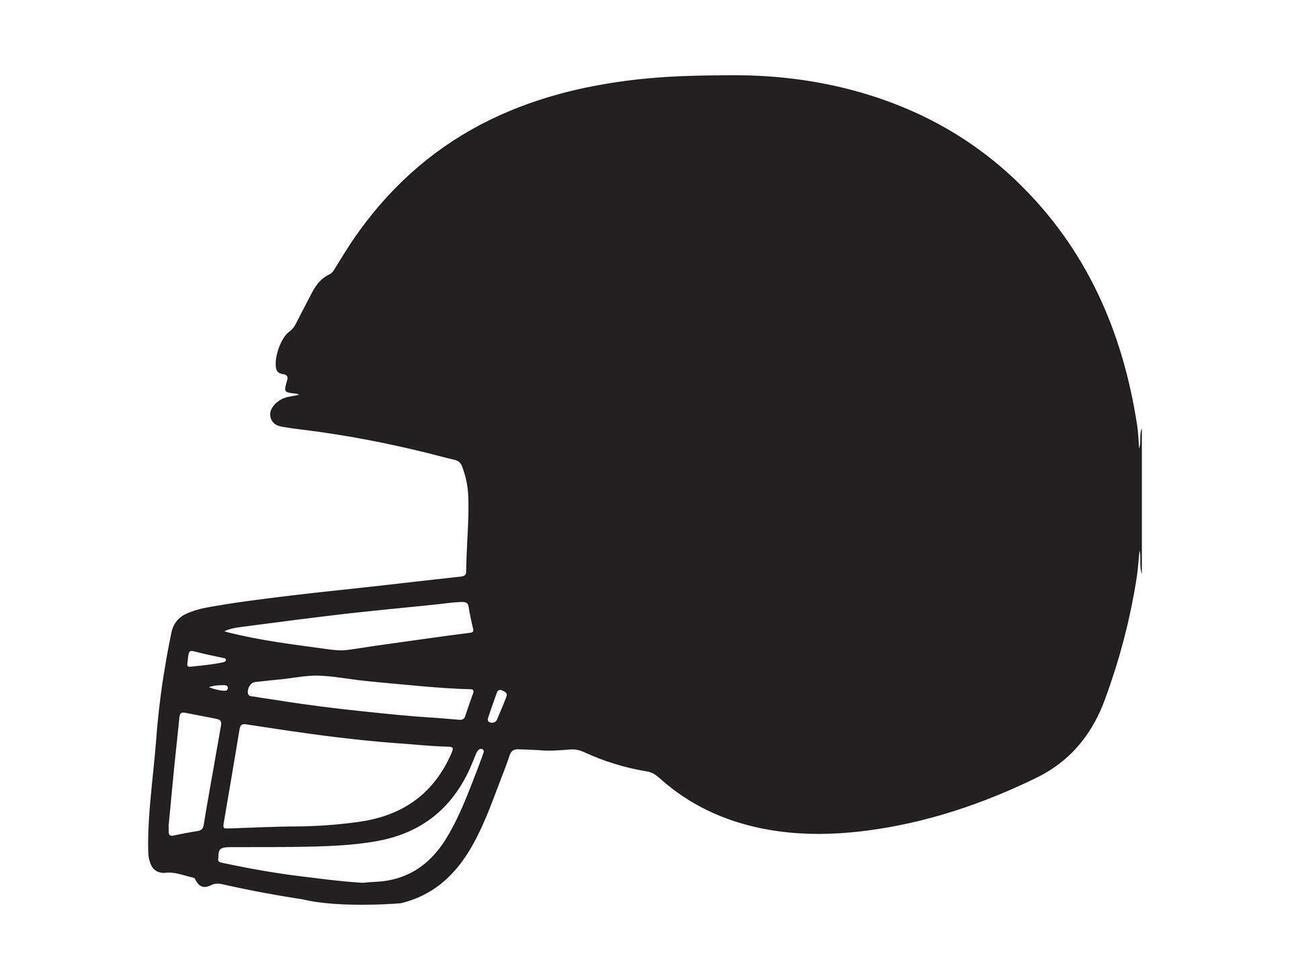 Football casque silhouette sur blanc Contexte vecteur